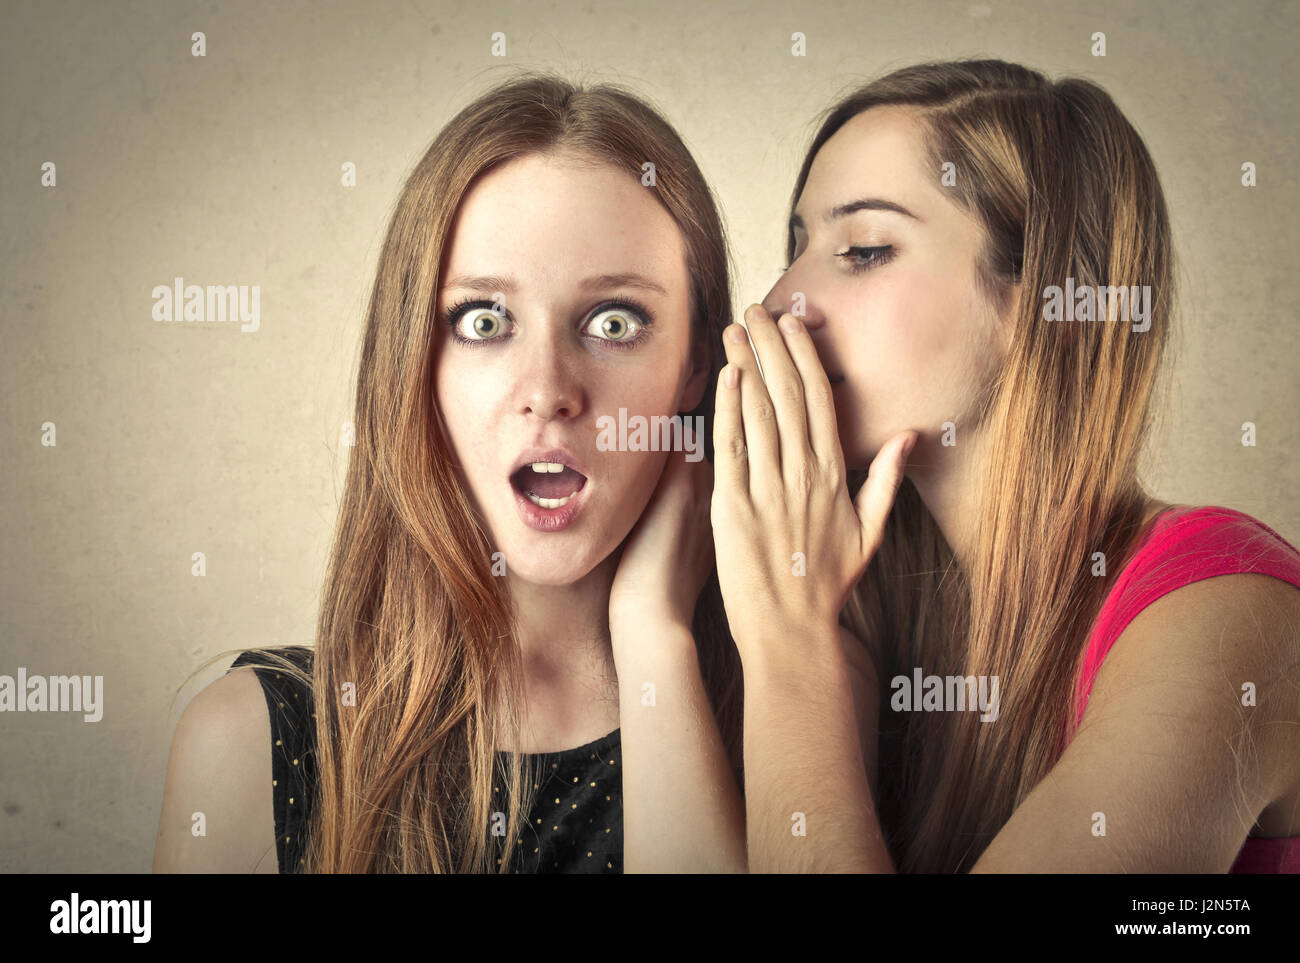 Woman whispering something to suprised woman Stock Photo